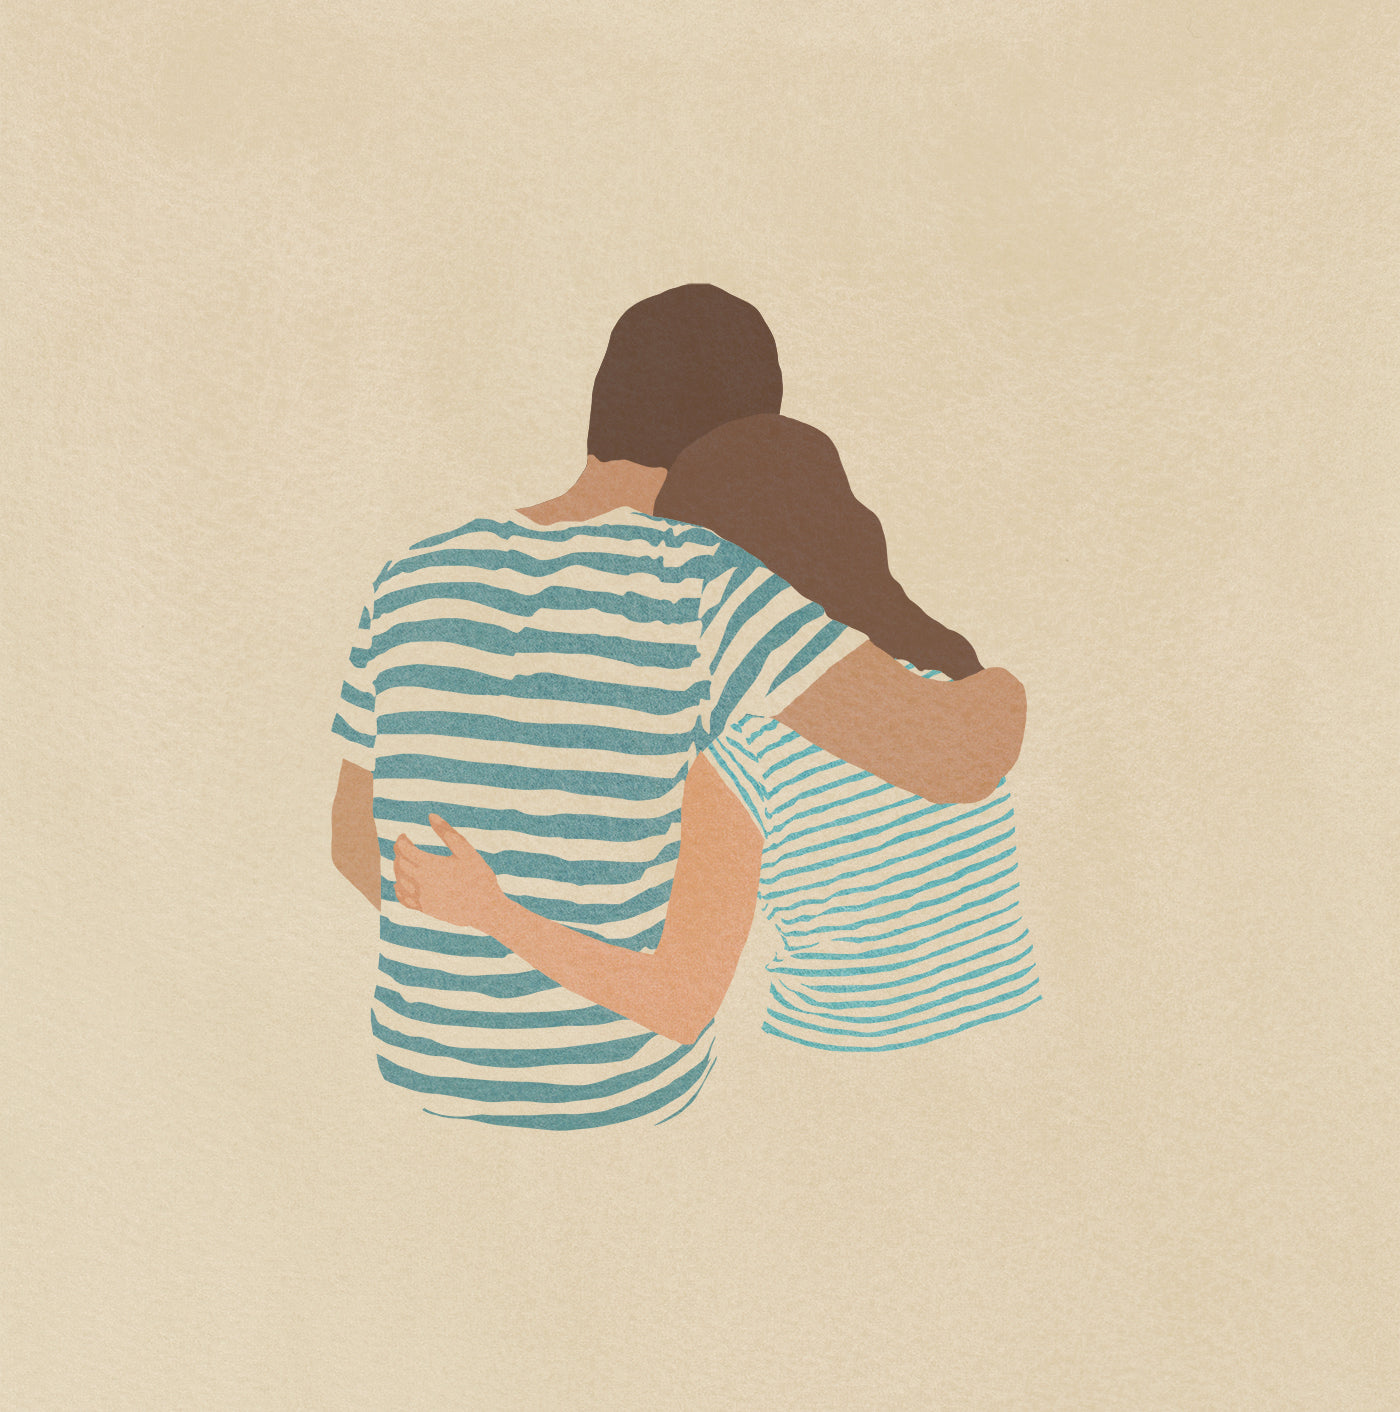 couples hugging drawings